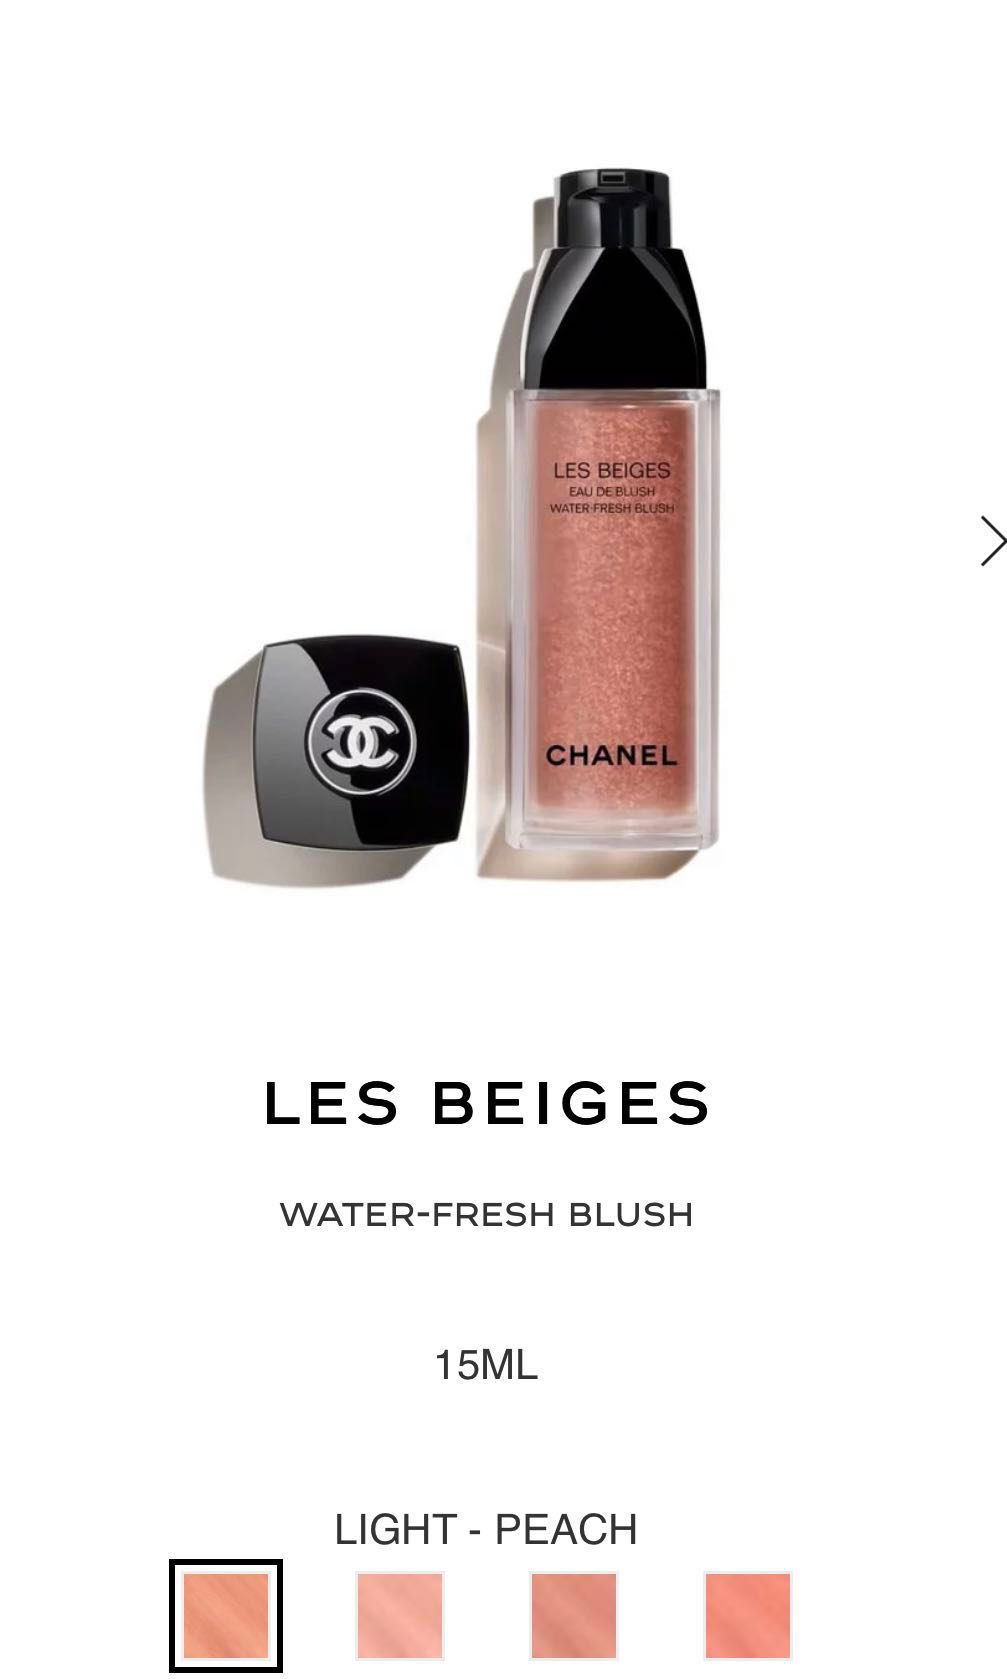 CHANEL Les Beiges Water-Fresh Blush (Light-Peach), Beauty